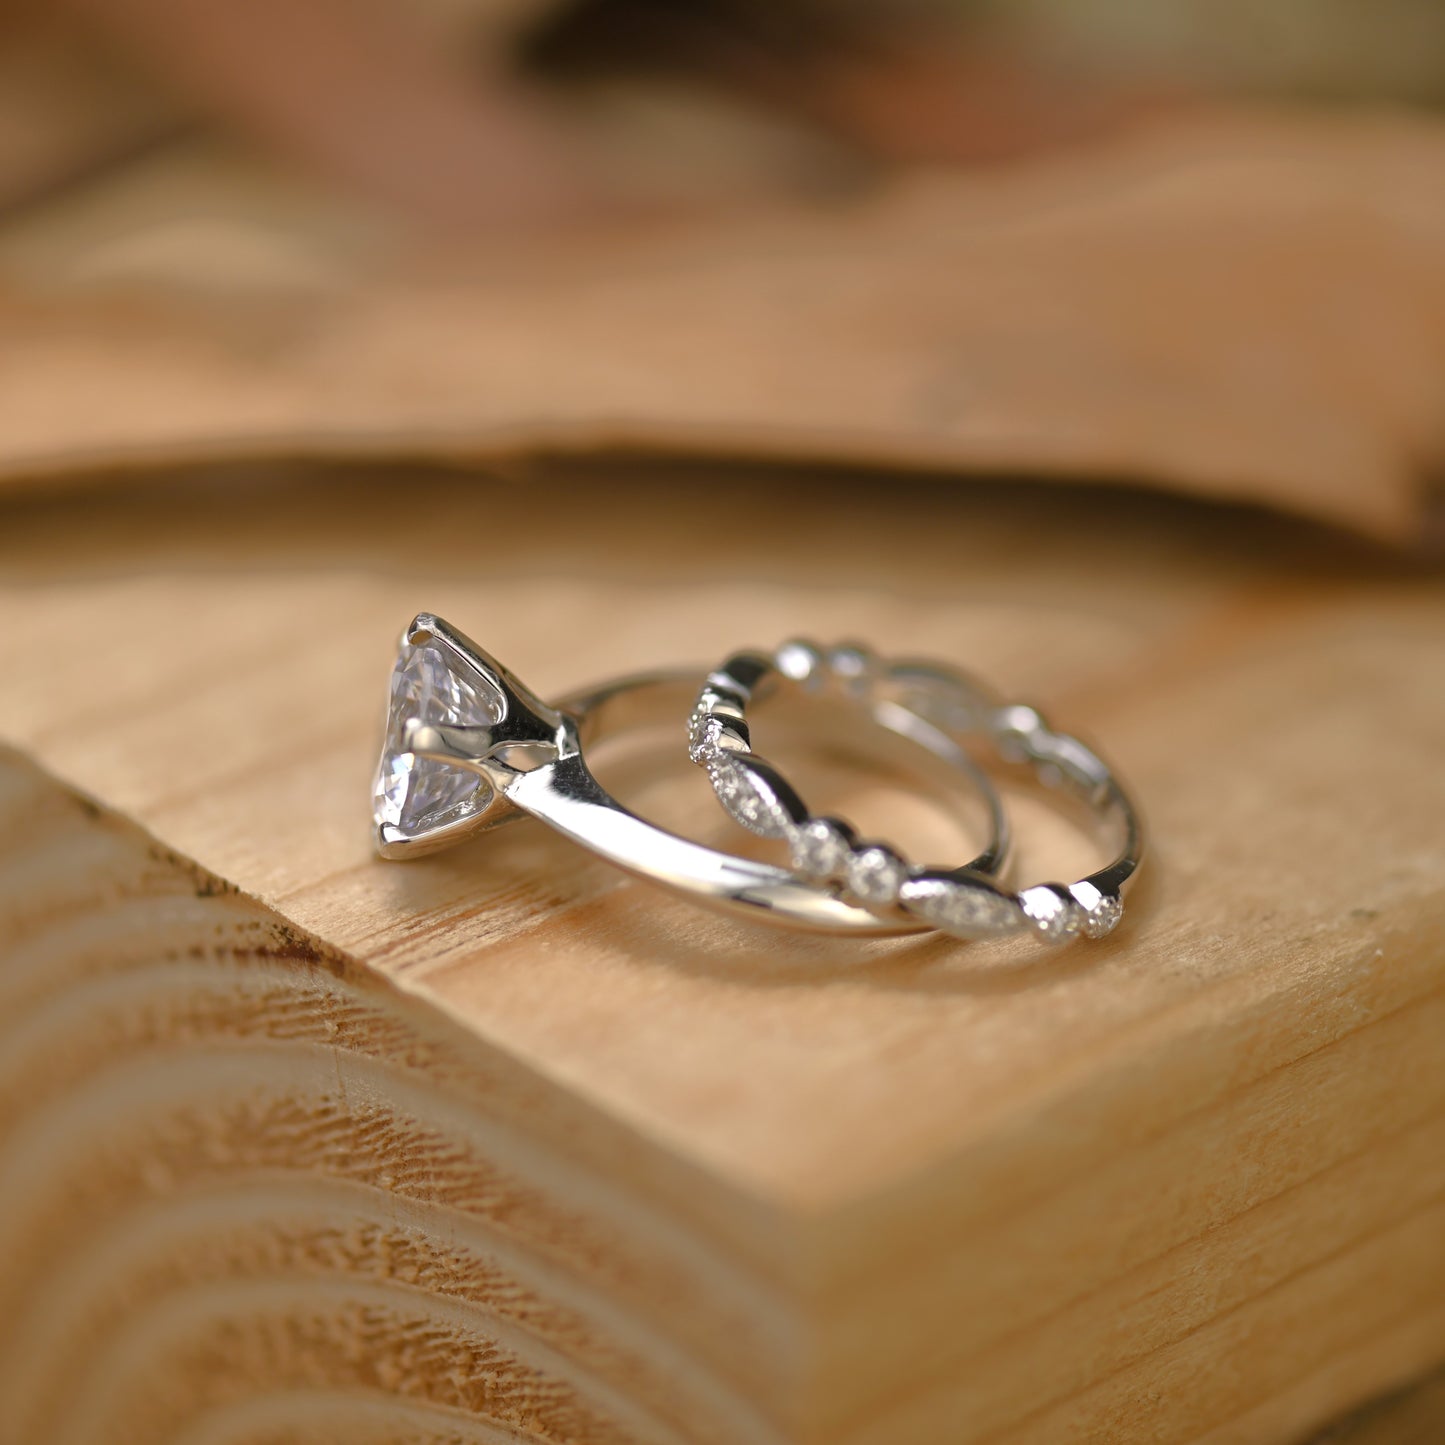 5Ct Vintage Moissanite Round Cut Engagement Ring Set